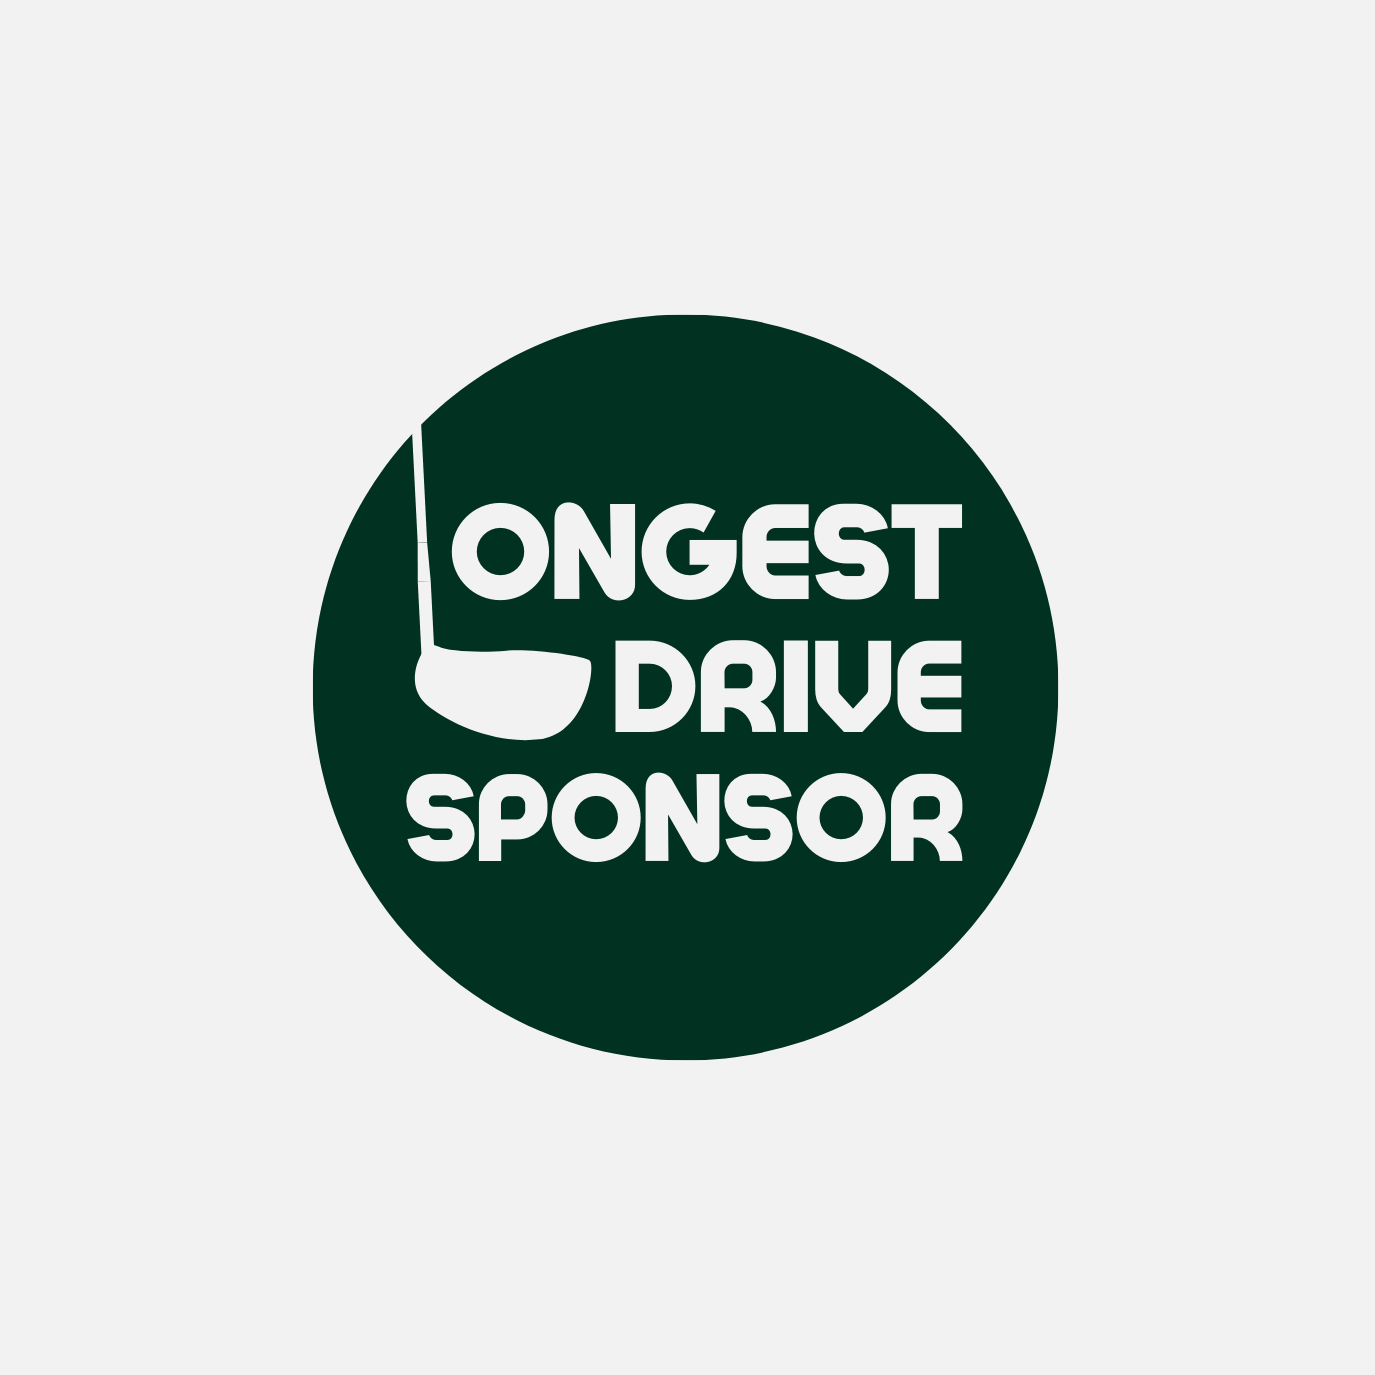 Longest Drive Sponsor